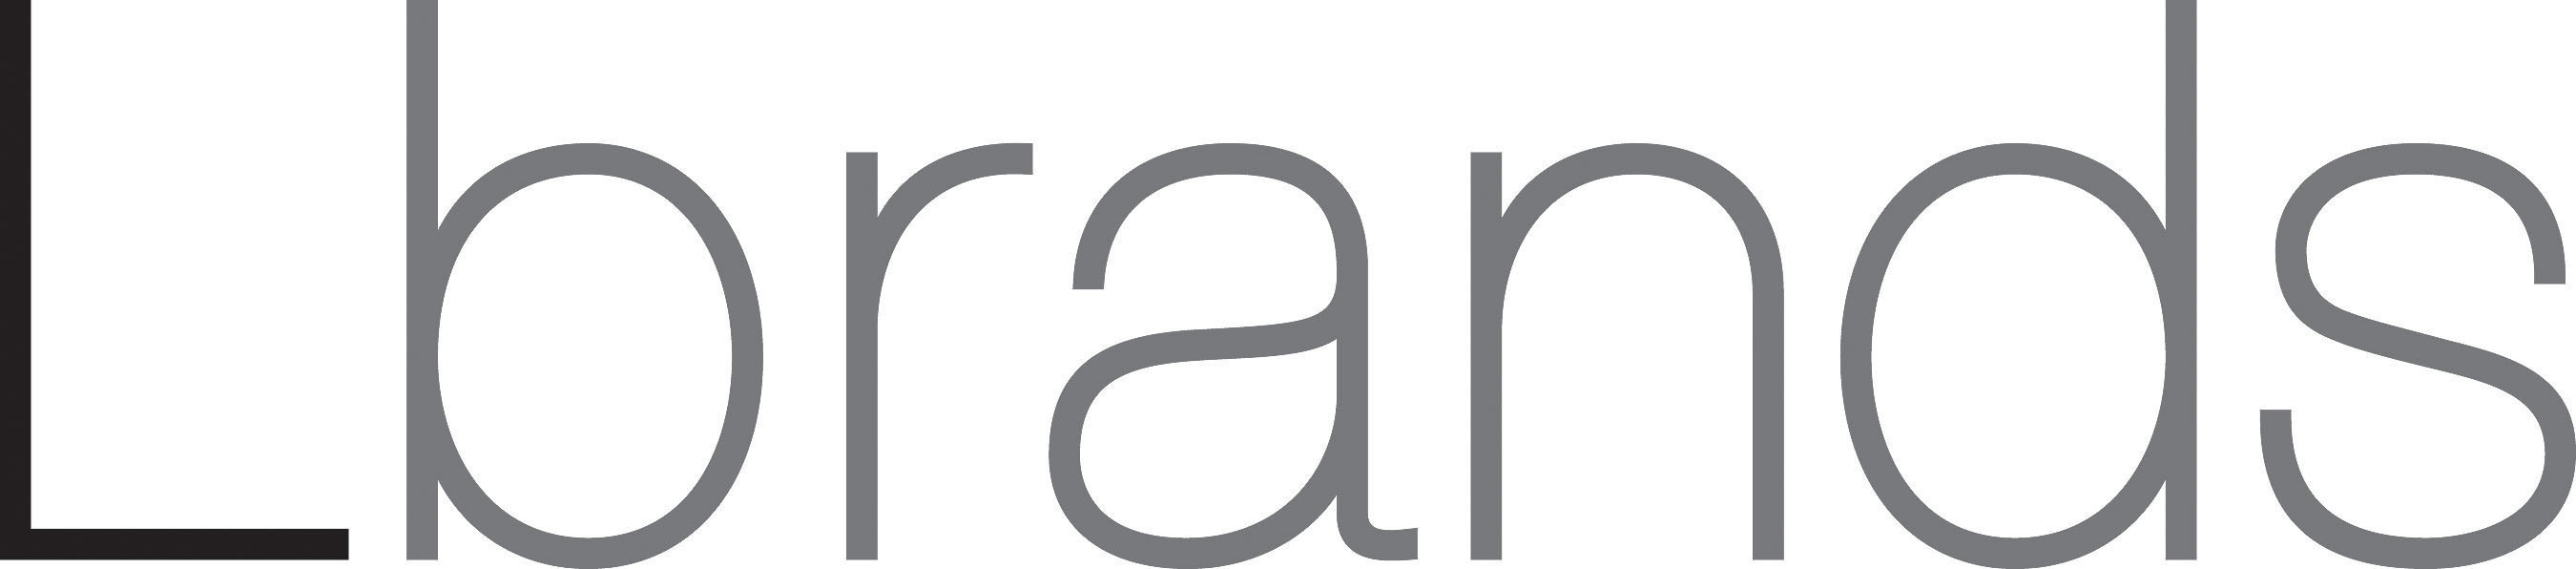 L Brands, Inc. logo.